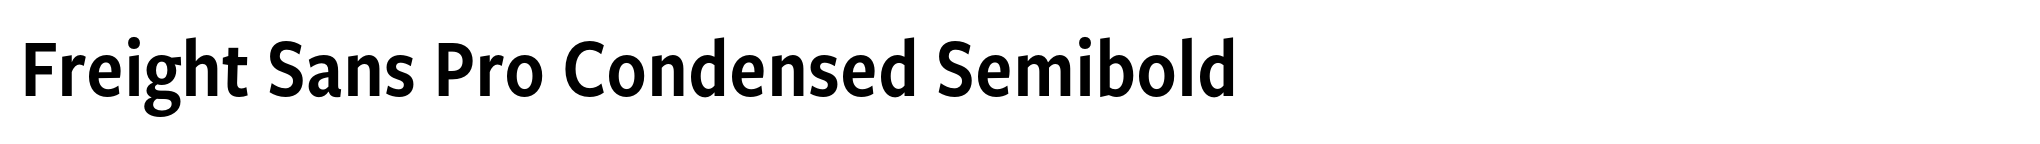 Freight Sans Pro Condensed Semibold image